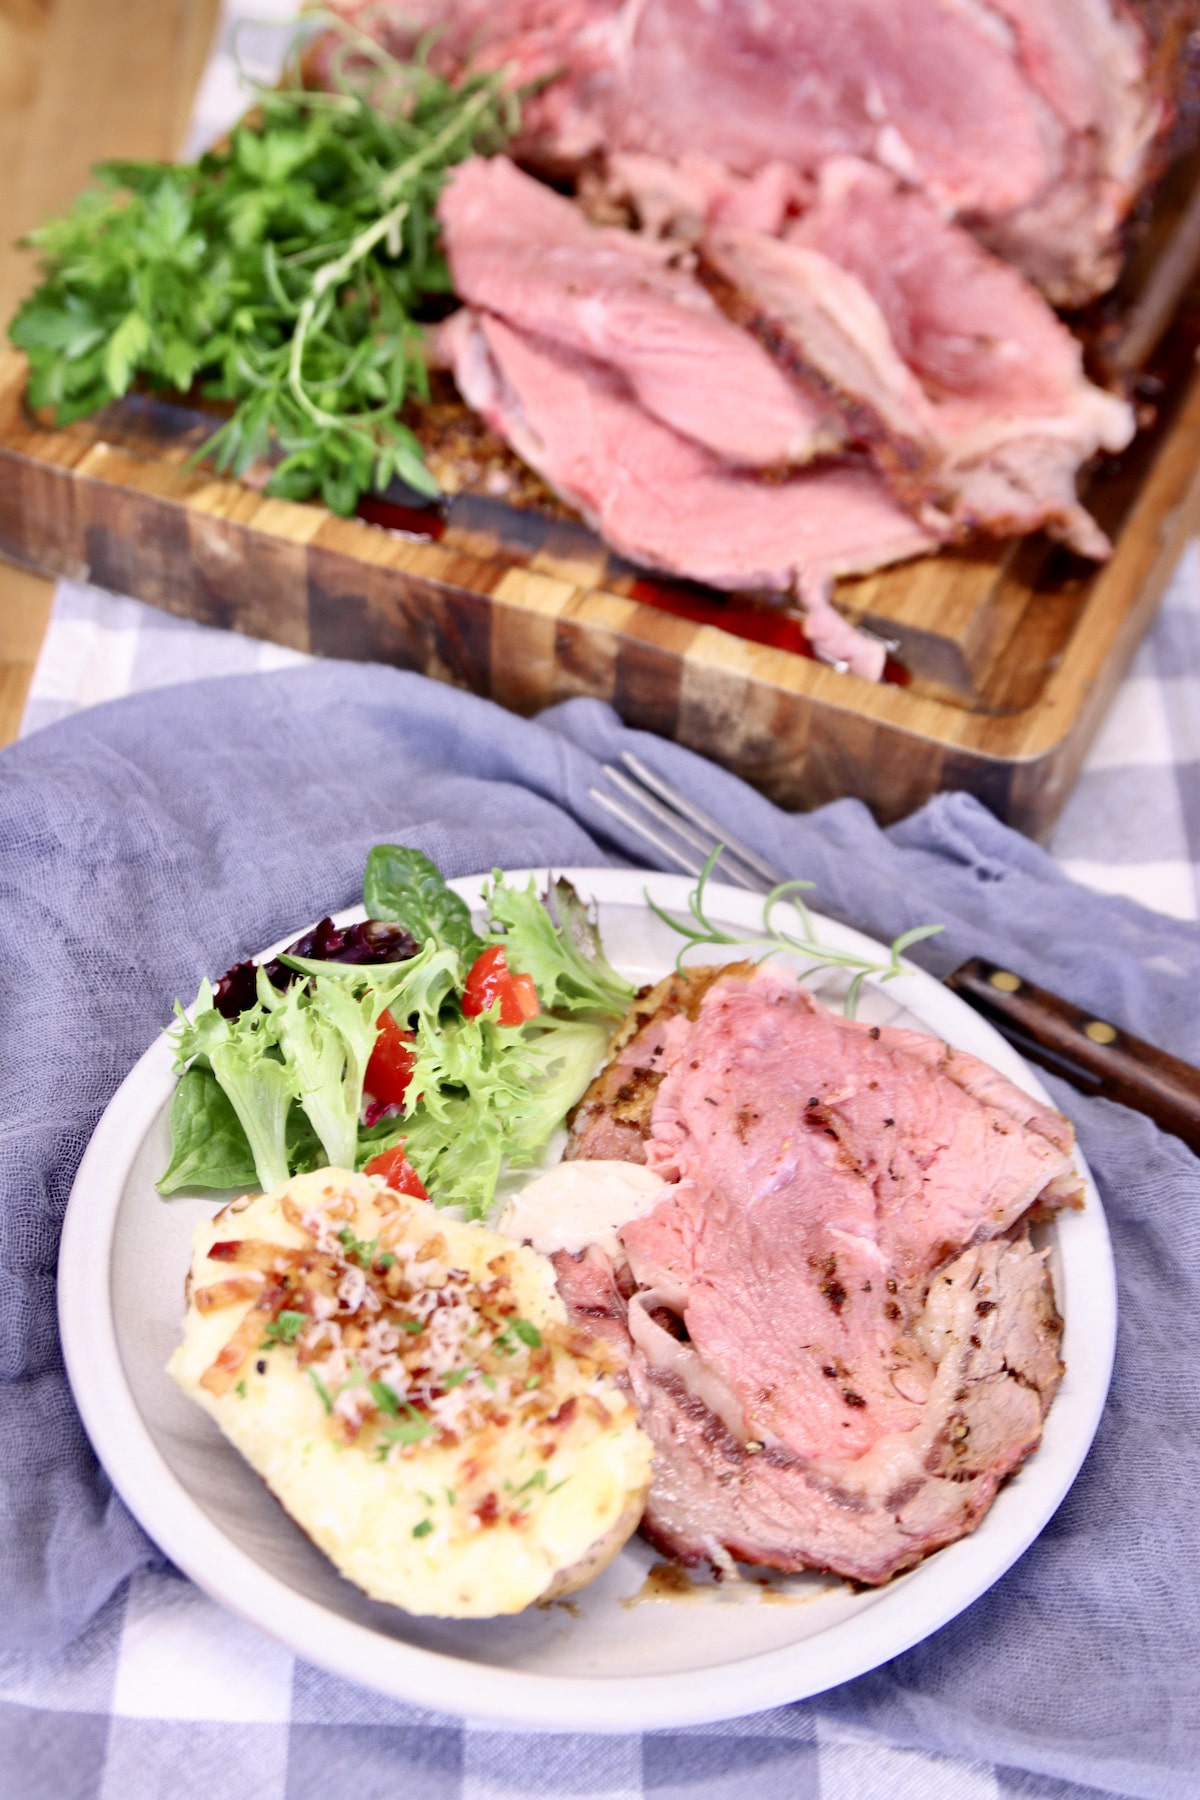 Overhead view of plate of prime rib, potato, salad.